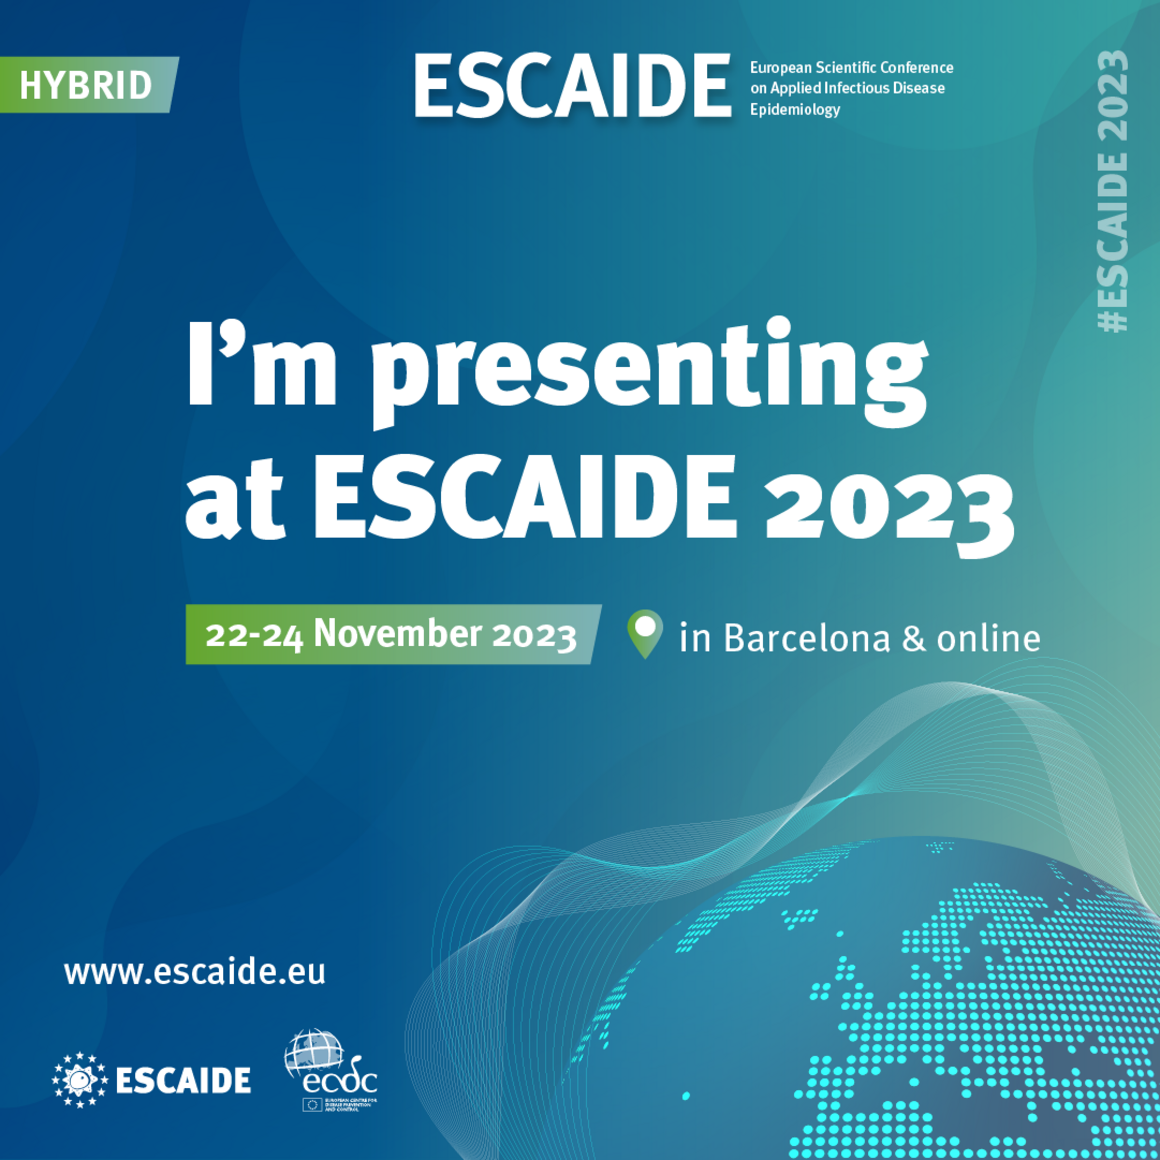 Facebook: I'm presenting at ESCAIDE 2023